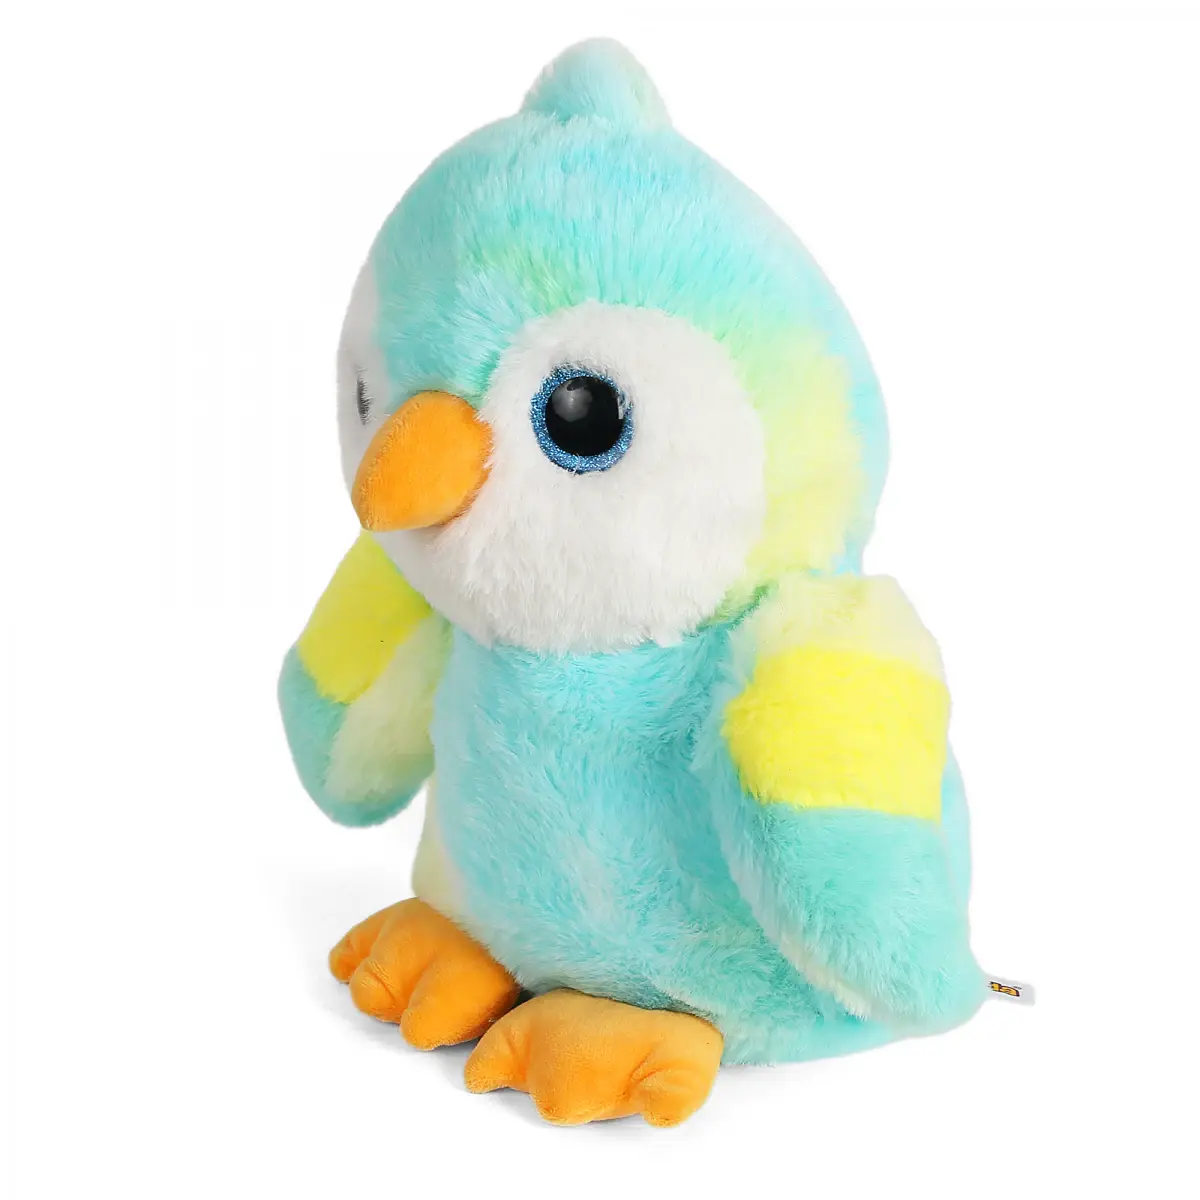 Mirada Penguin Soft Toys for Kids, 28cm, 3Y+, Green